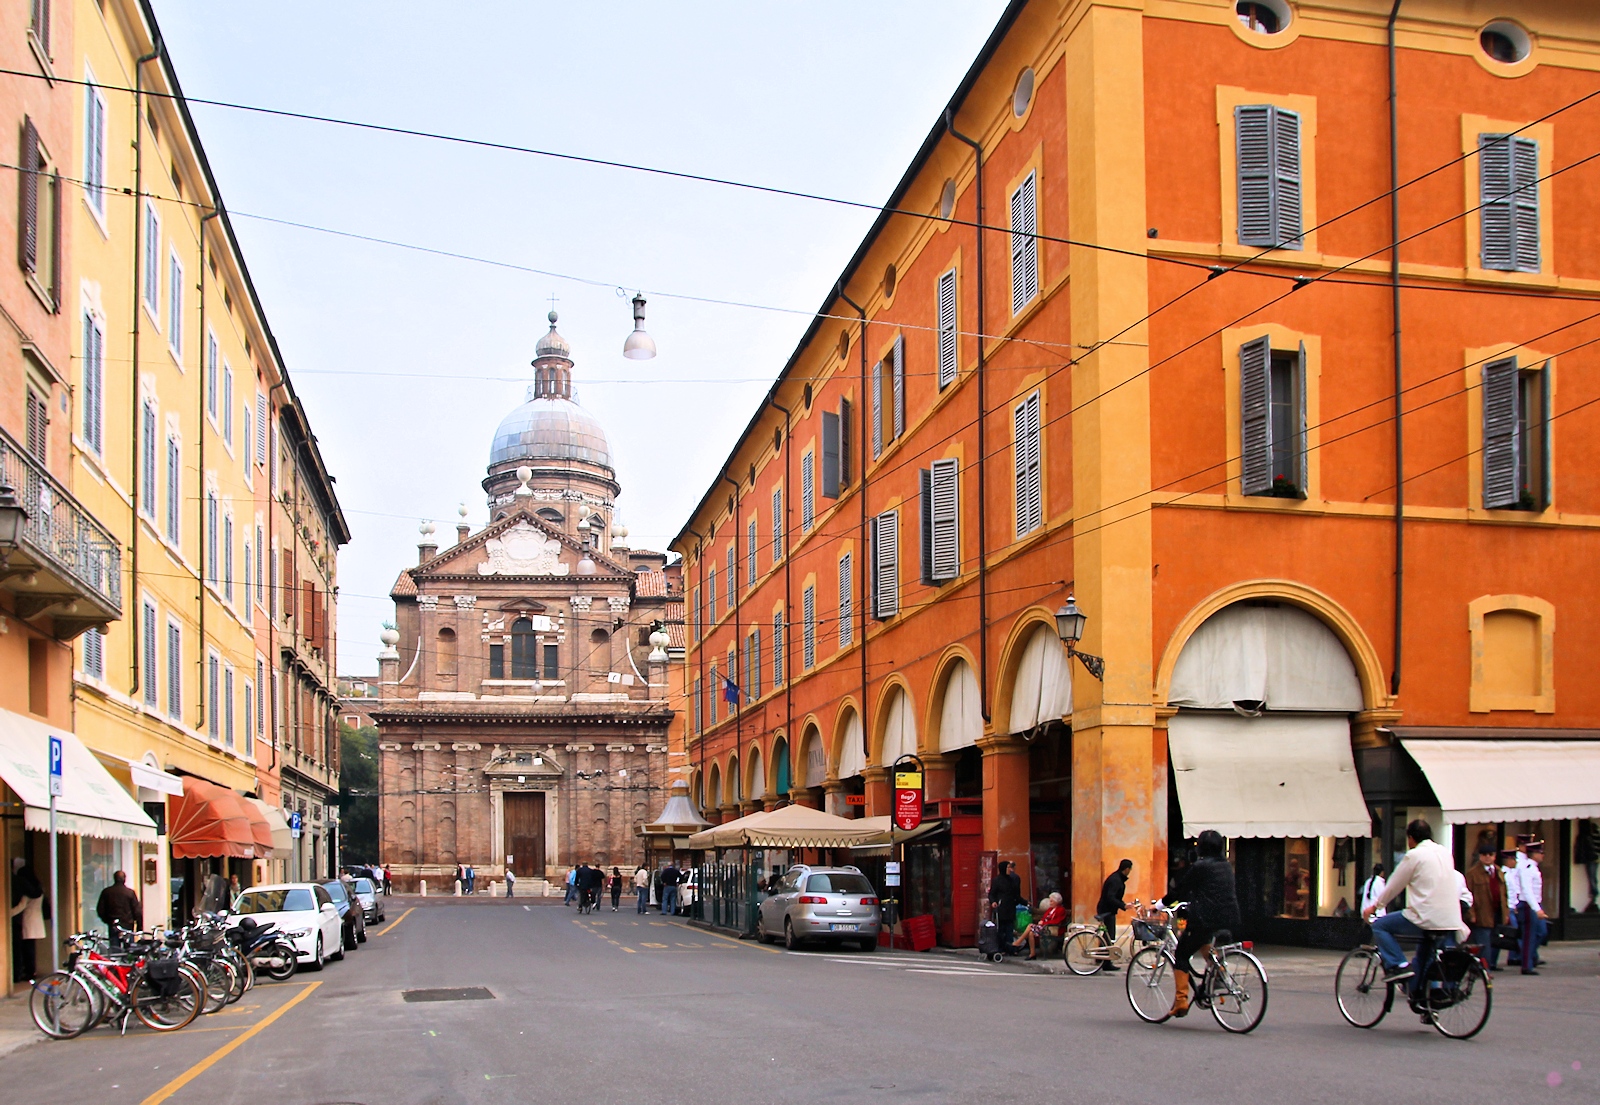 File:05 Modena, Italy - モデナ イタリア.jpg - Wikimedia Commons